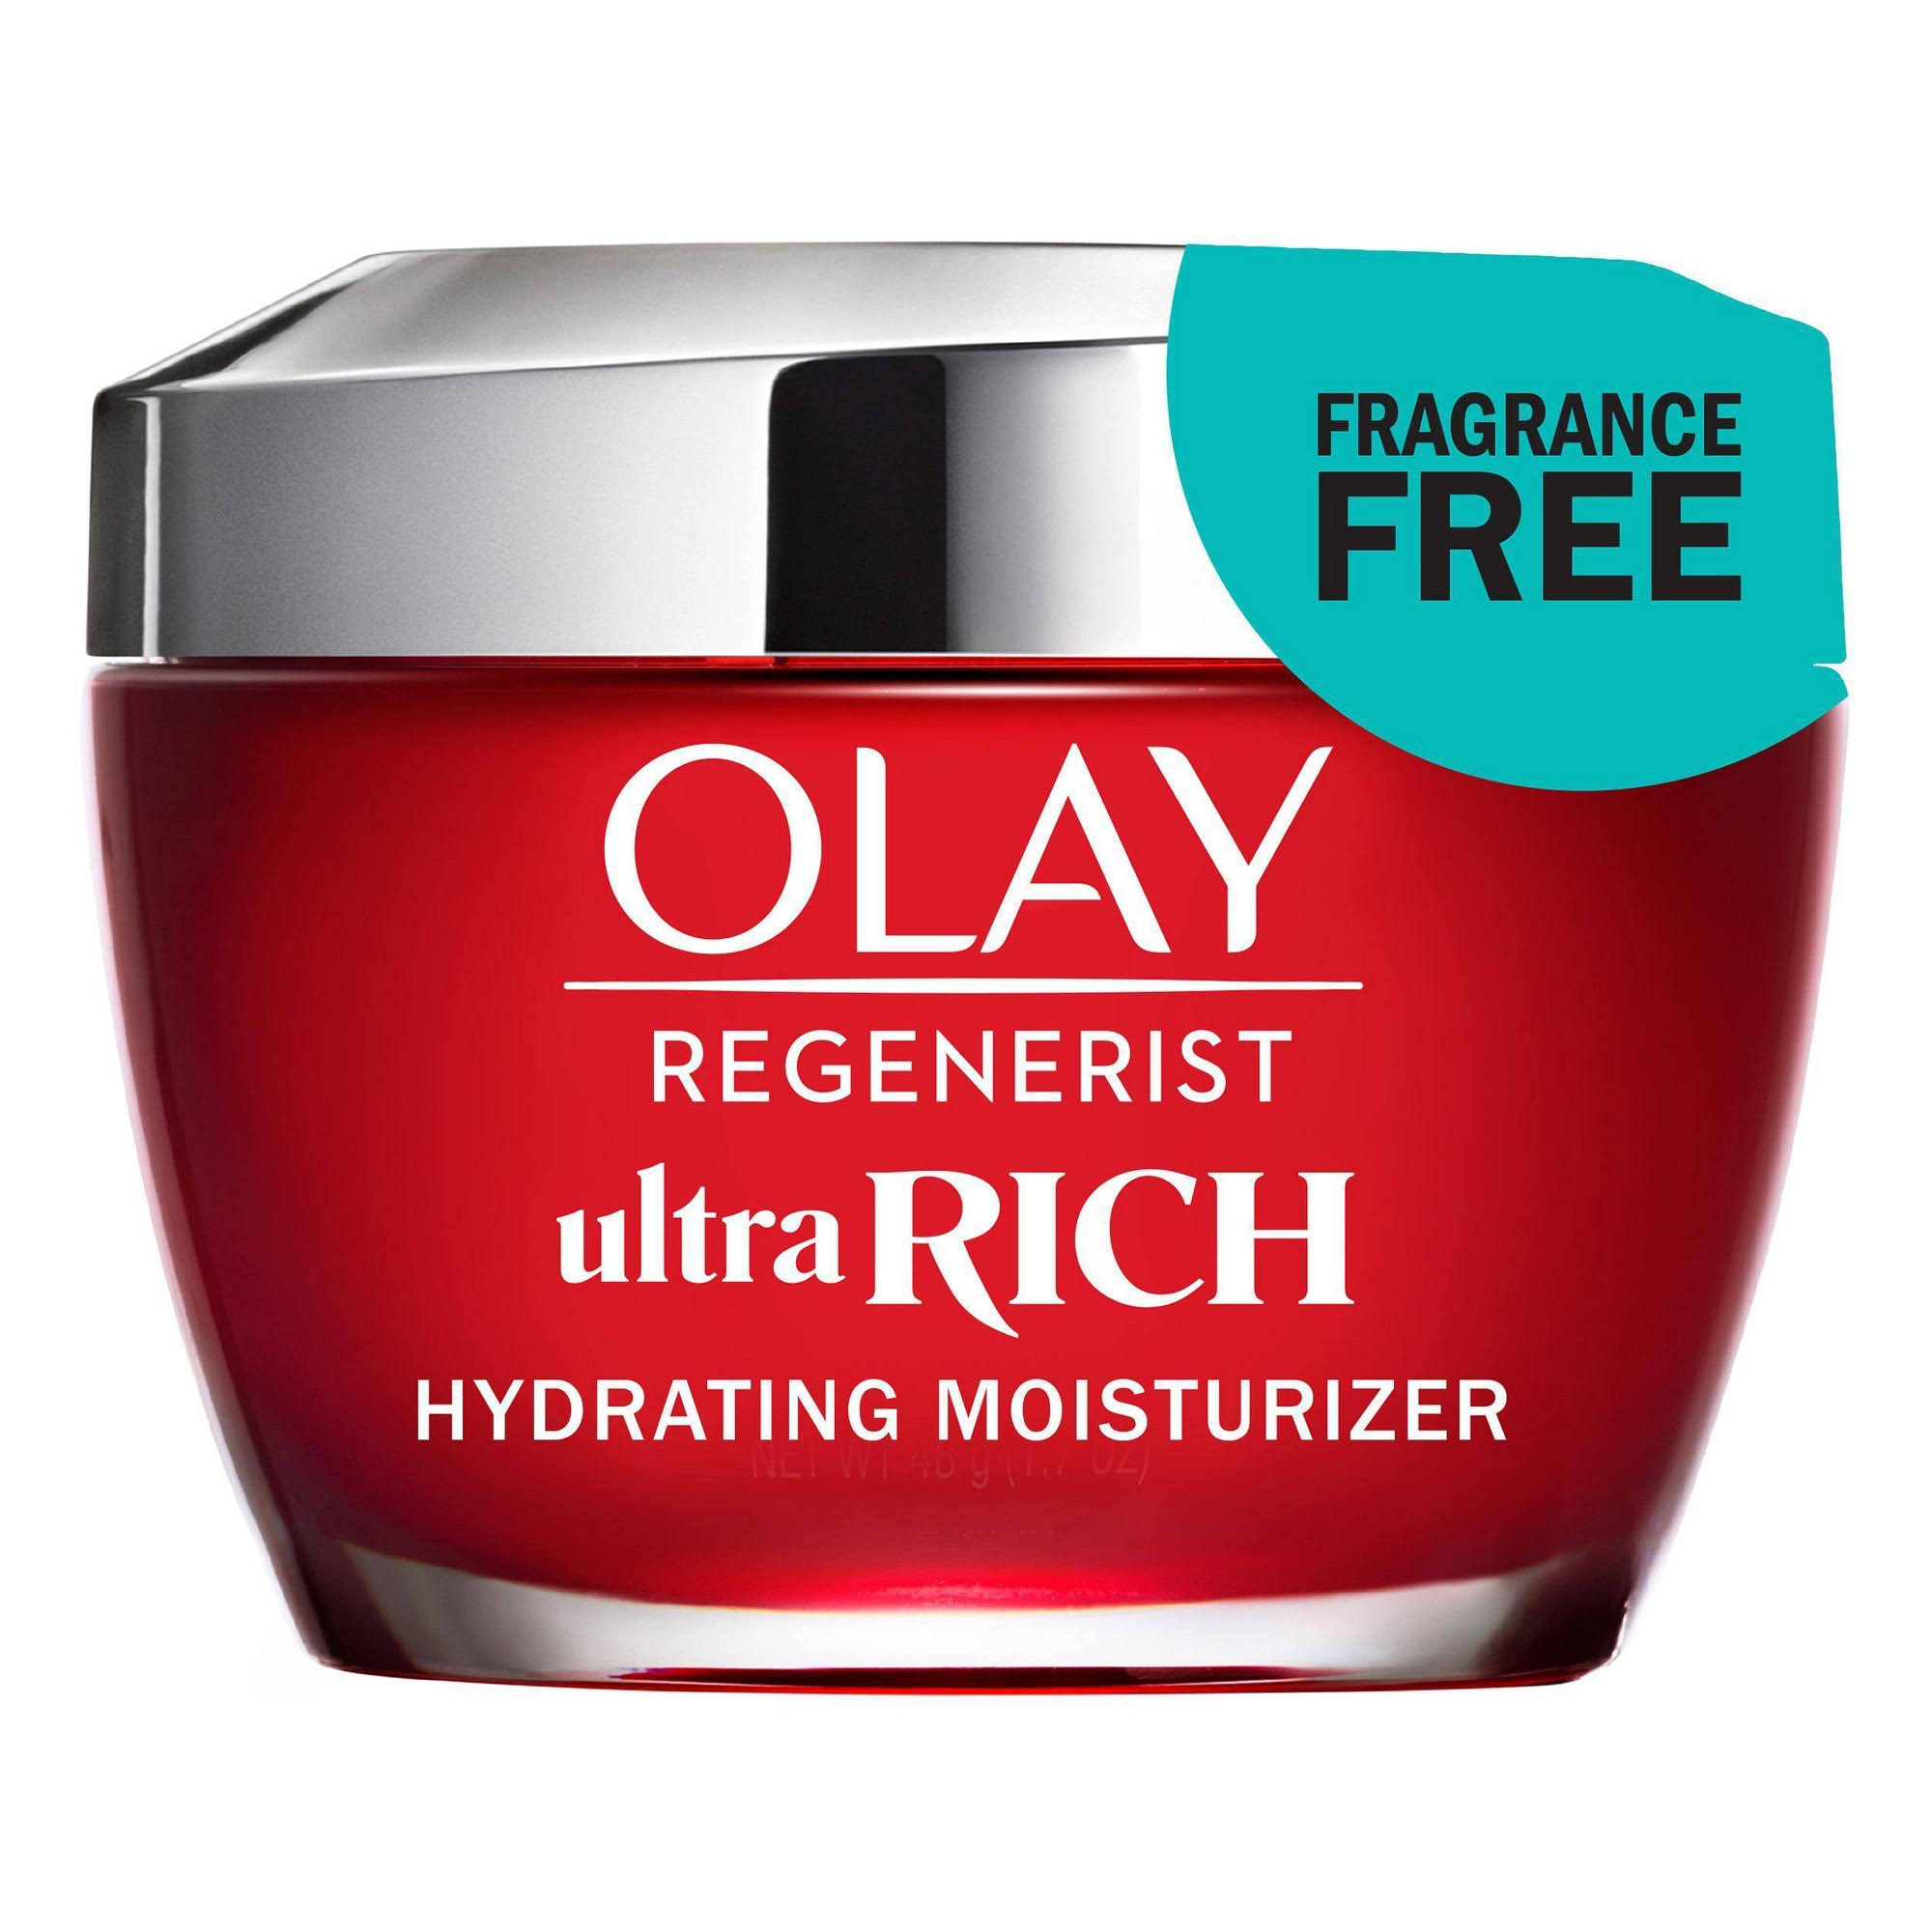 Olay Regenerist Ultra Rich Face Moisturizer, Fragrance-Free - 1.7 oz